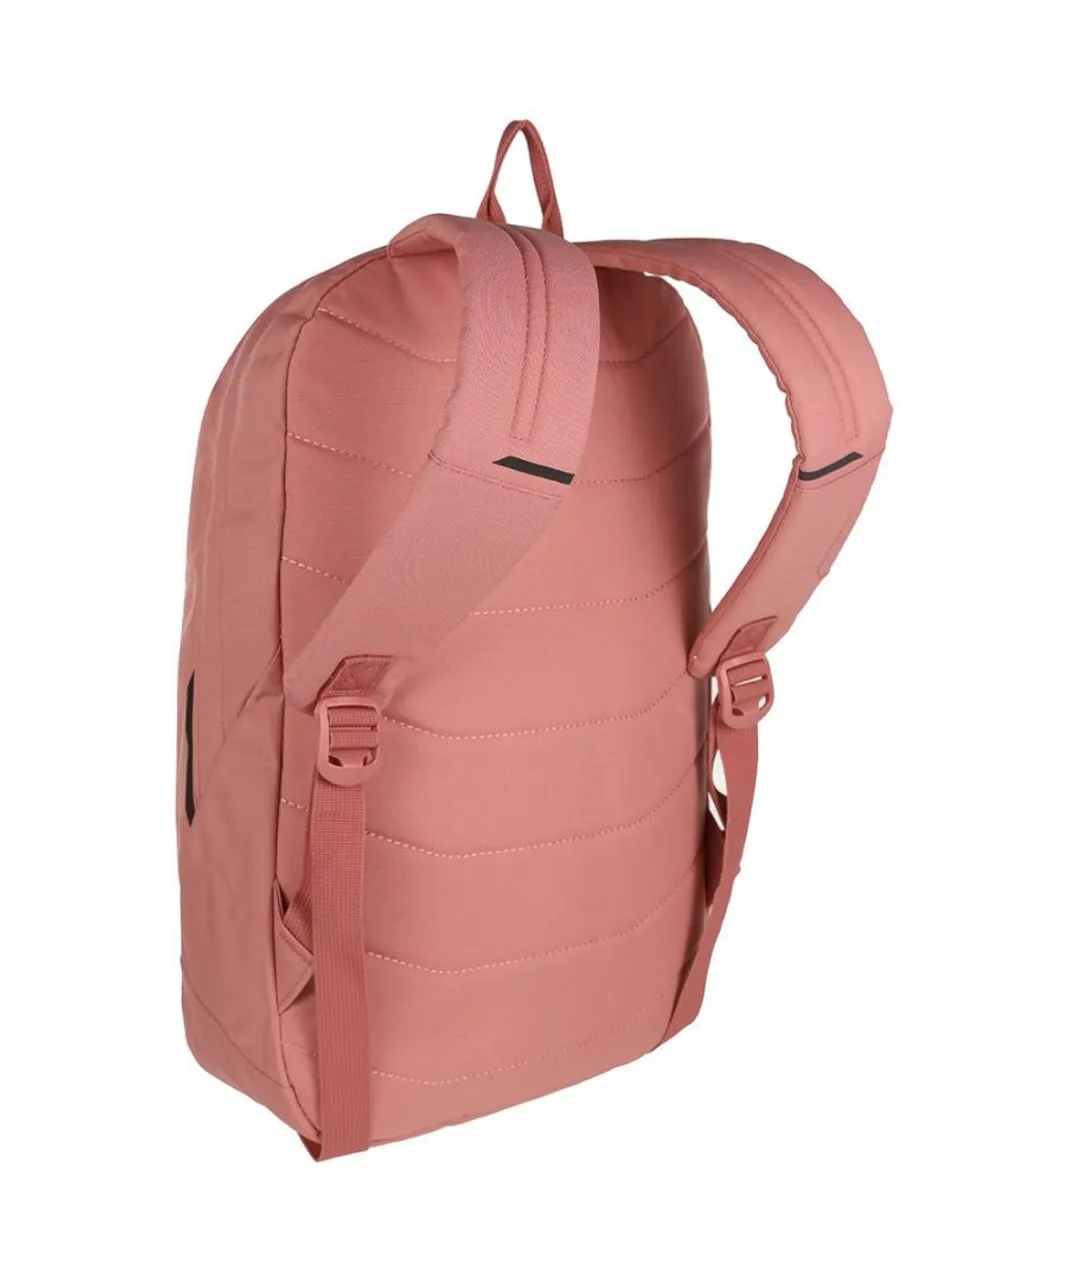 Regatta Unisex Shilton 20L Backpack (Dusty Rose) - One Size